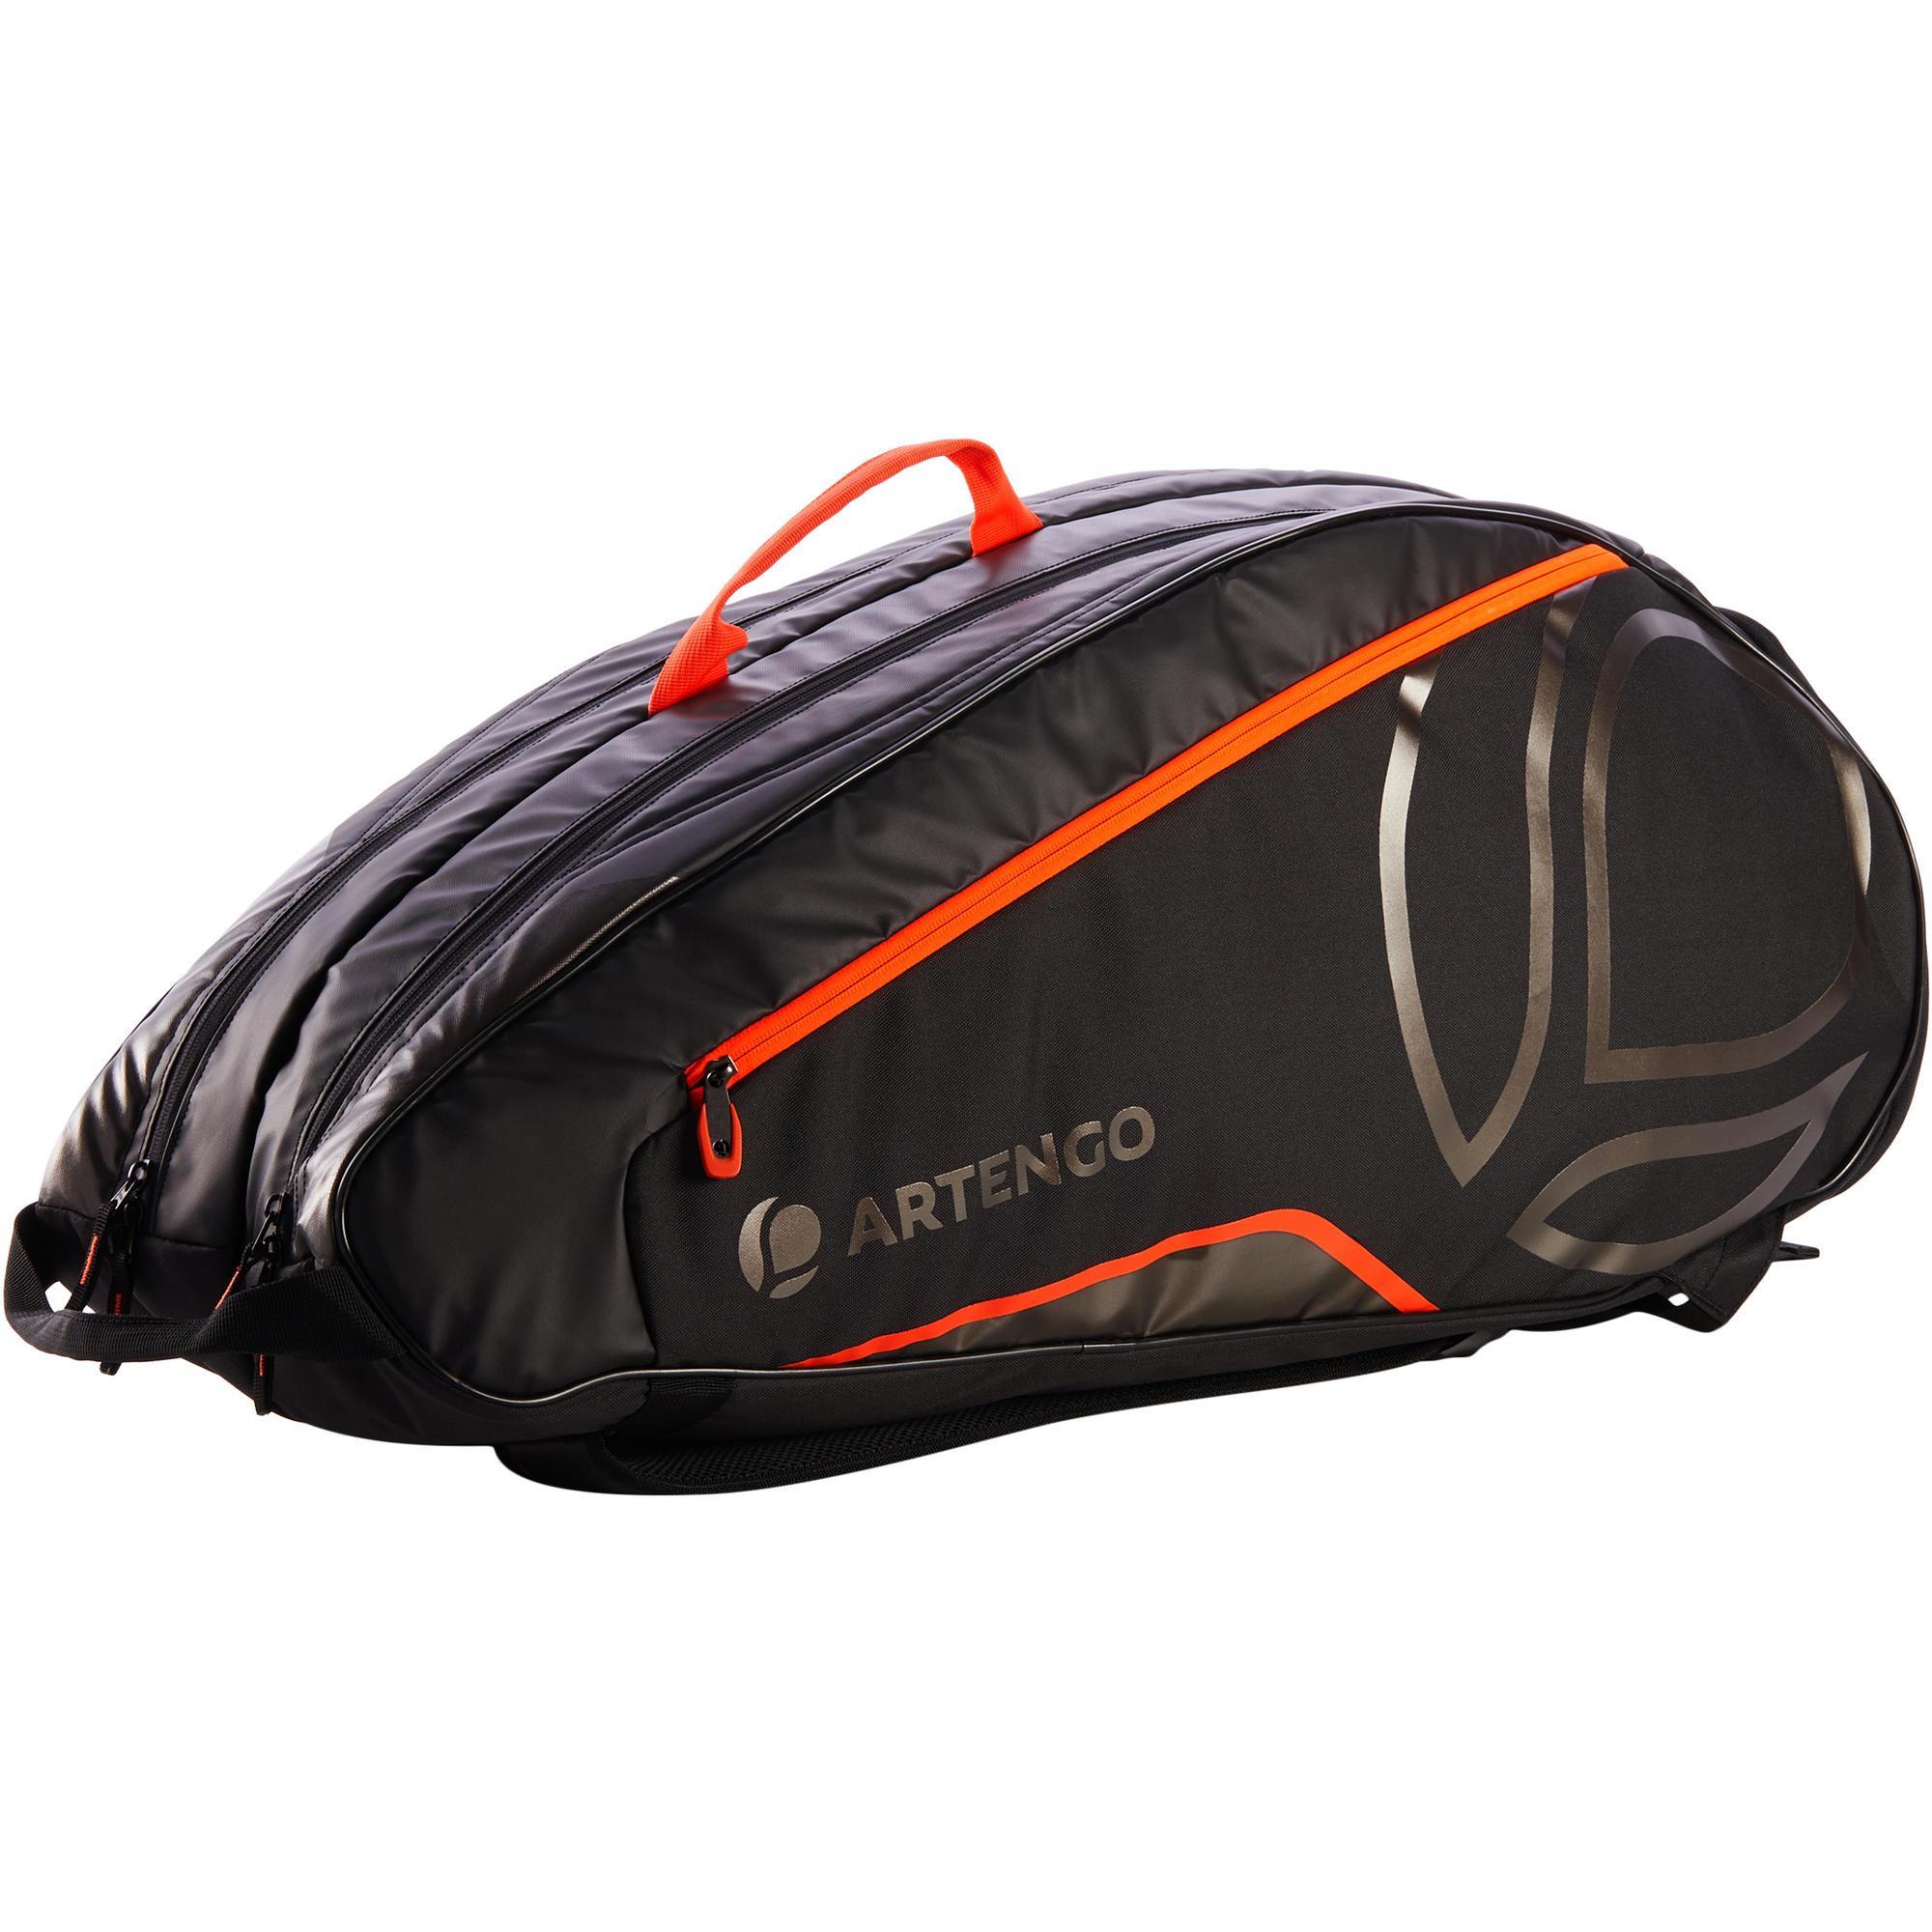 Tournament 930 Racket Sports Bag 